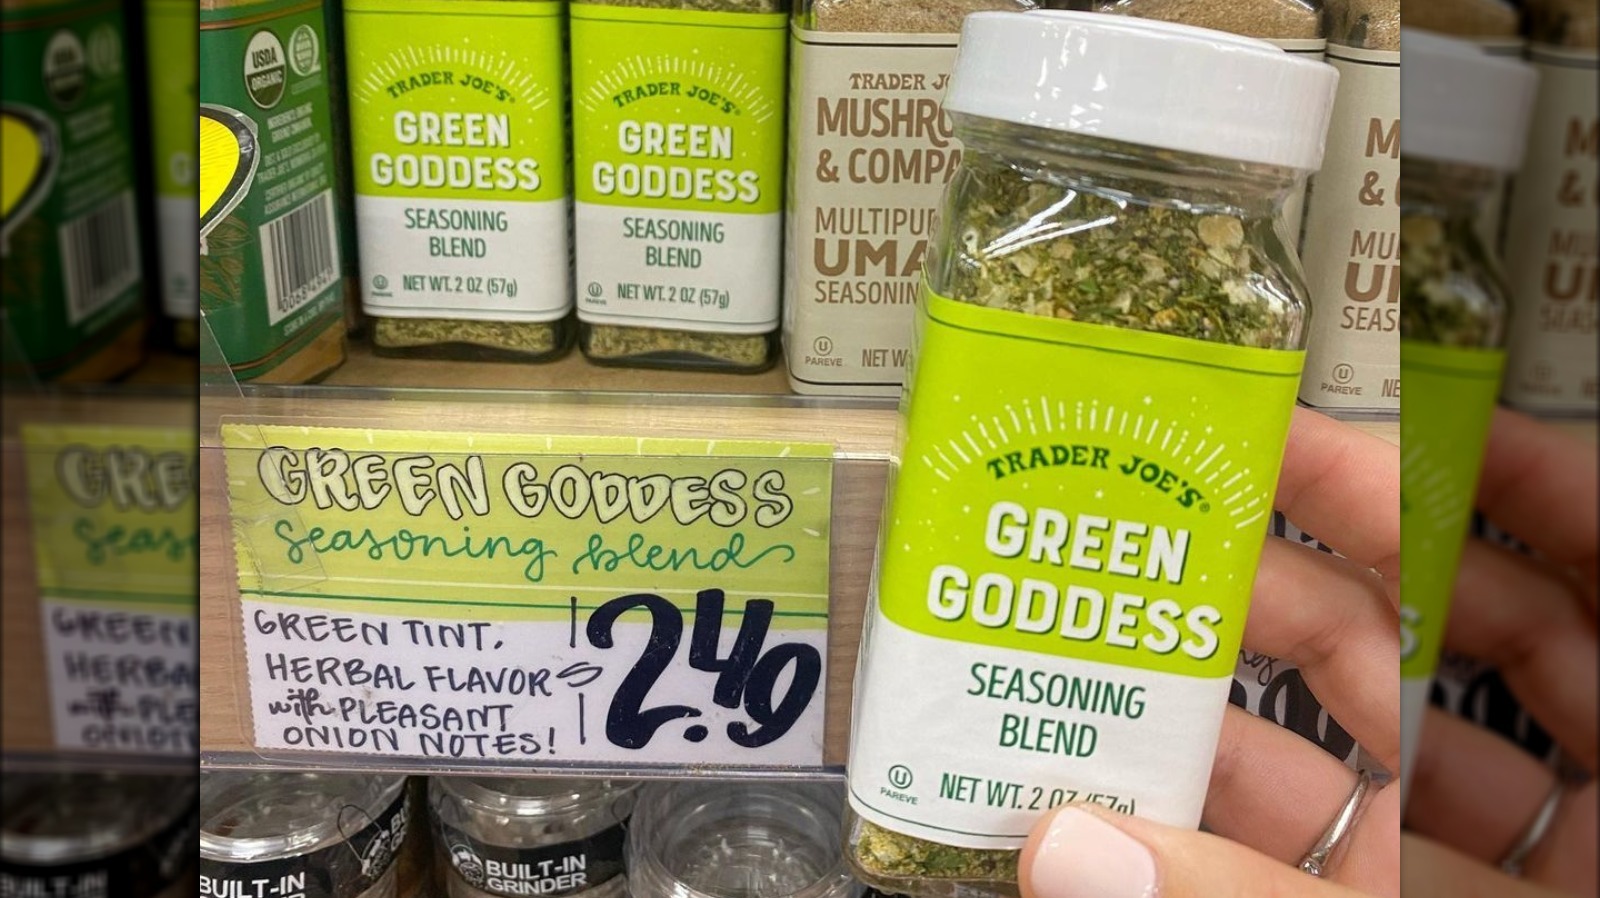 Green Goddess Salad Dressing Recipe - The Washington Post